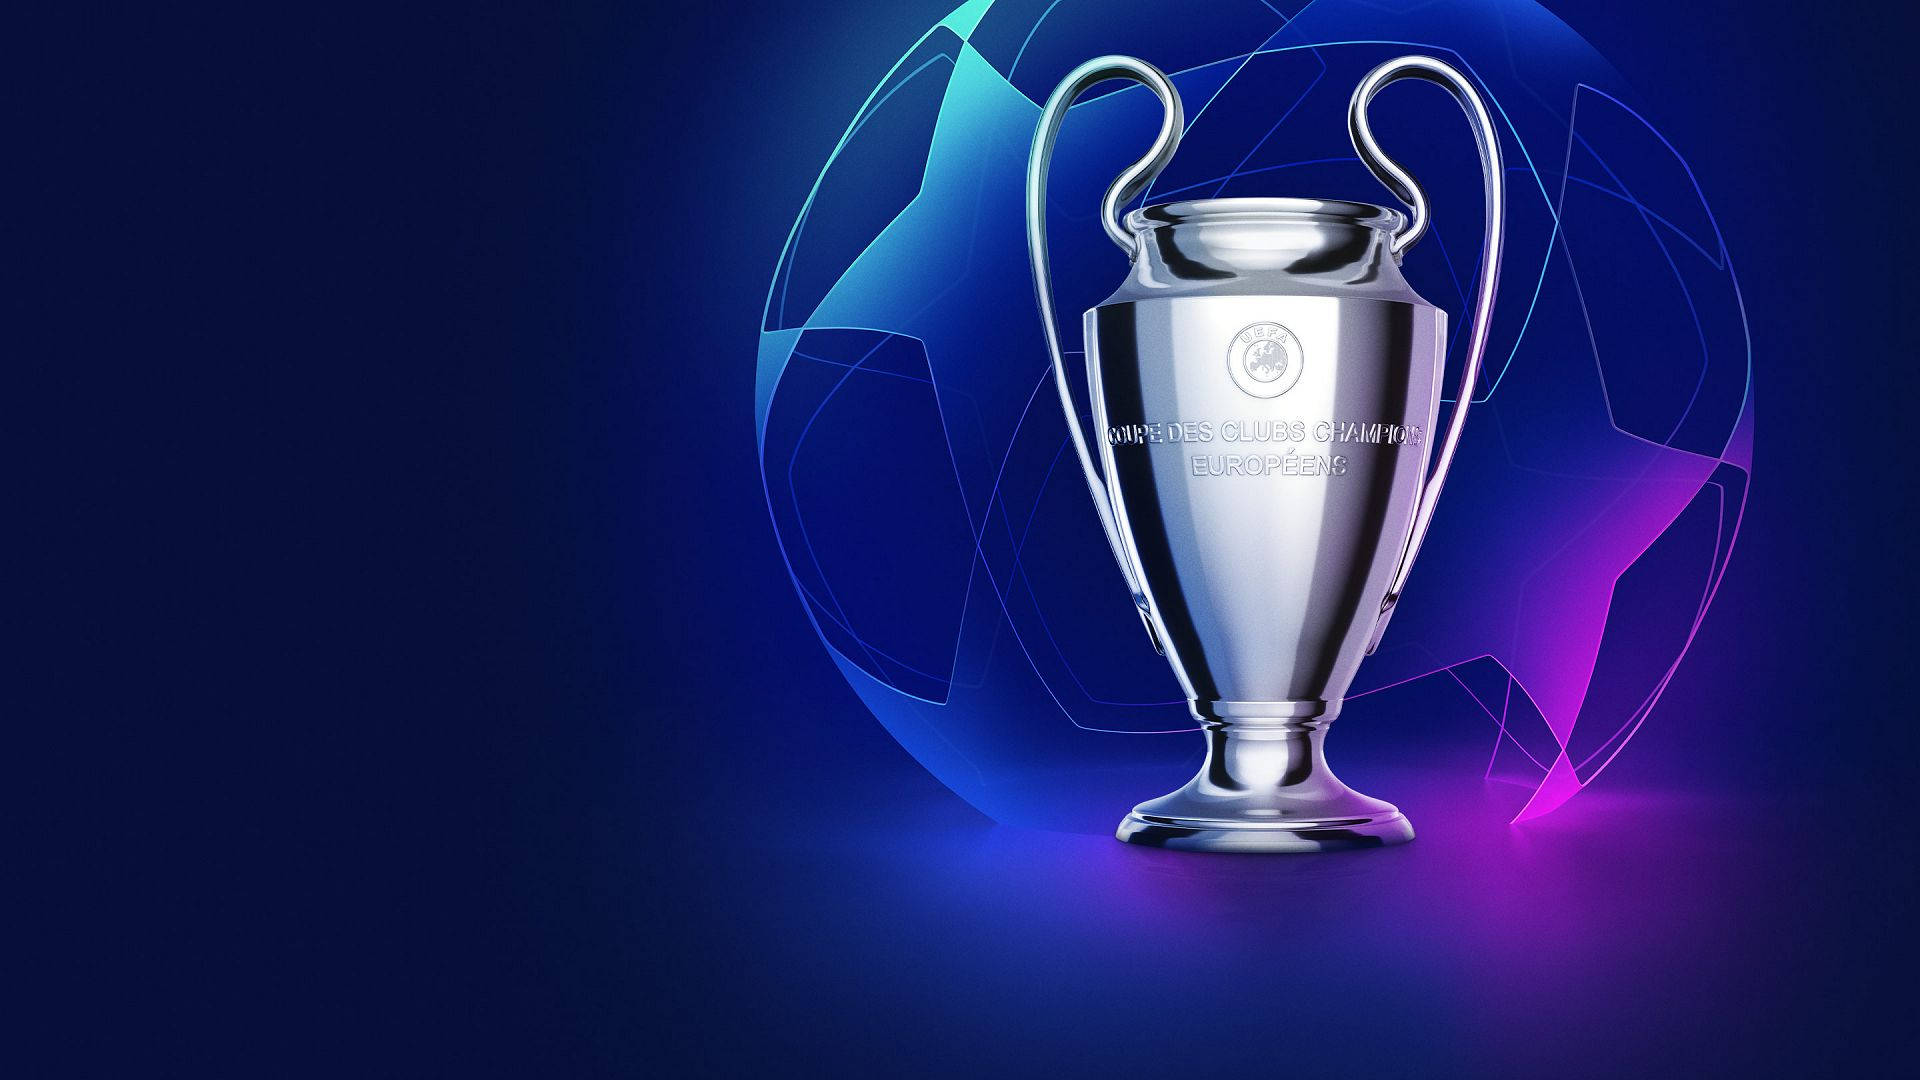 Uefa Champions League Football Club Trophy Background